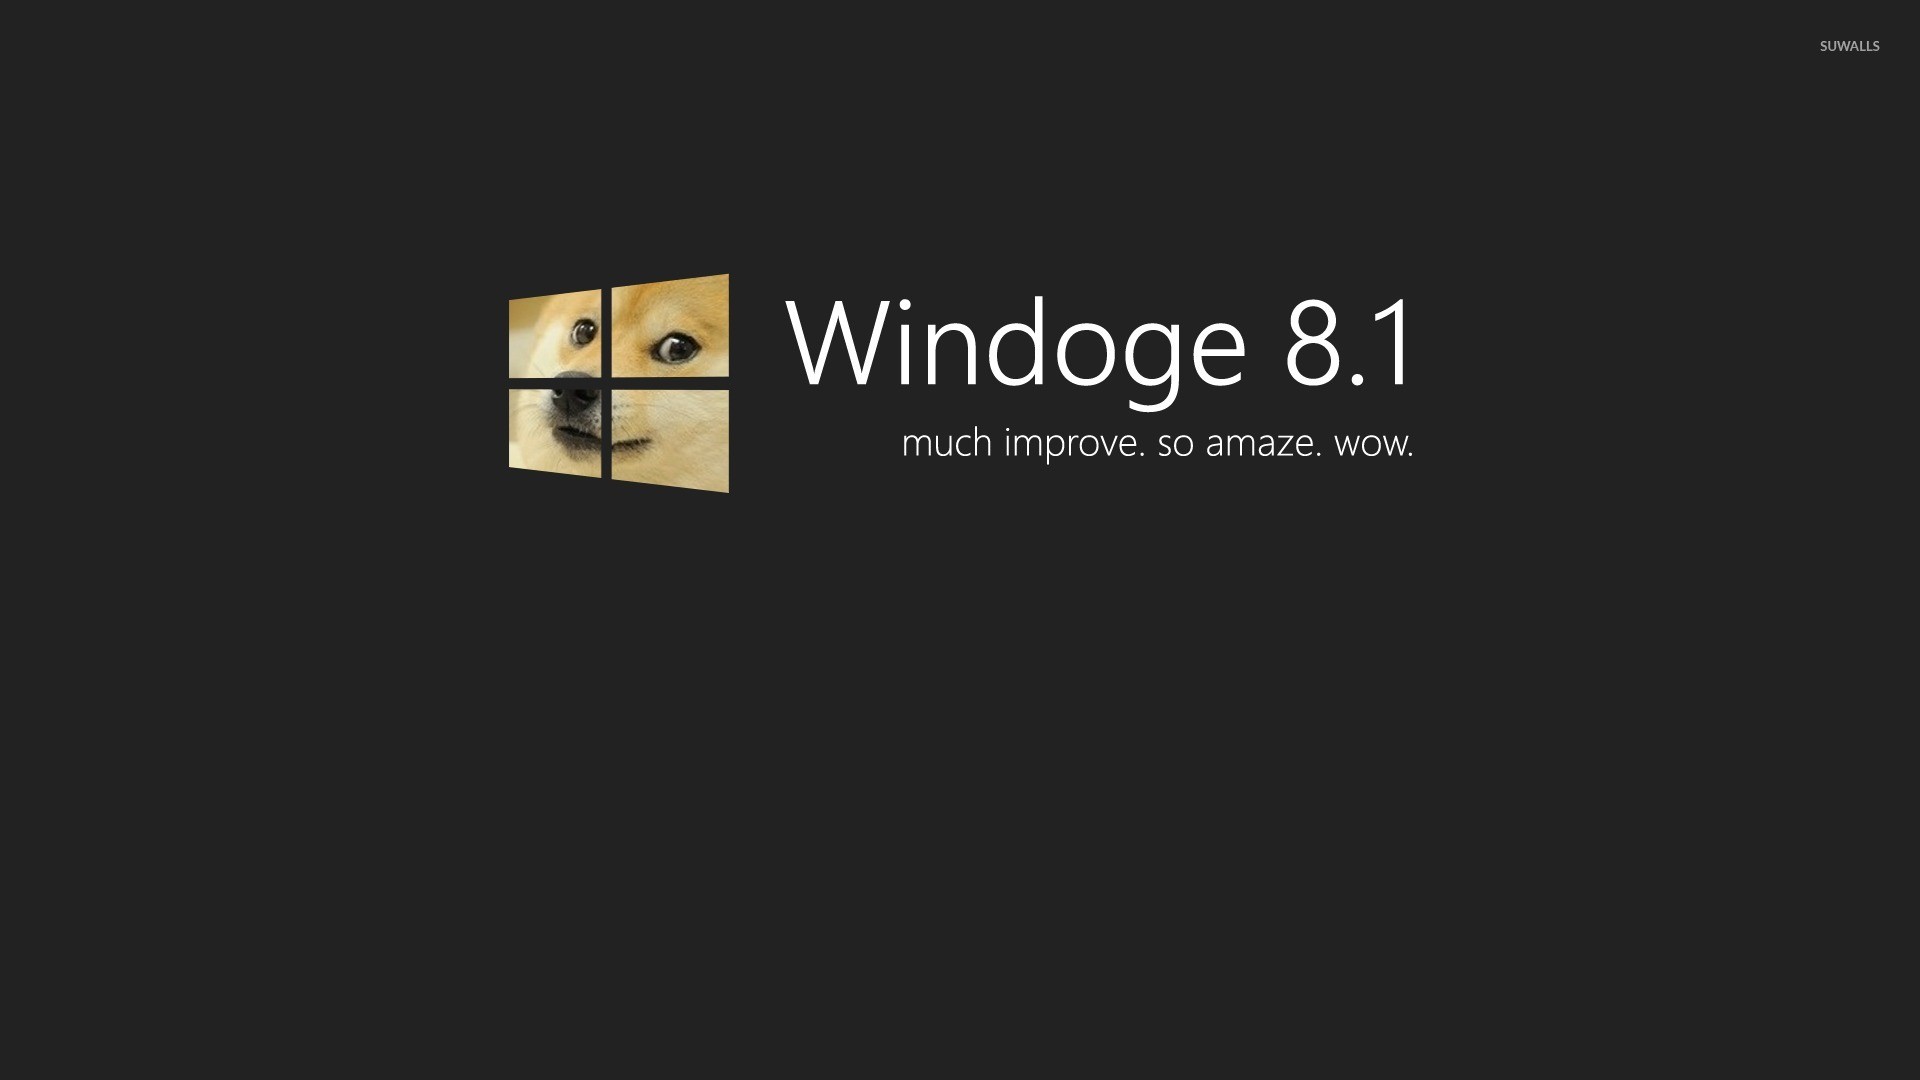 1920x1080 Doge Windows 8.1 wallpaper - Computer wallpapers - #27993